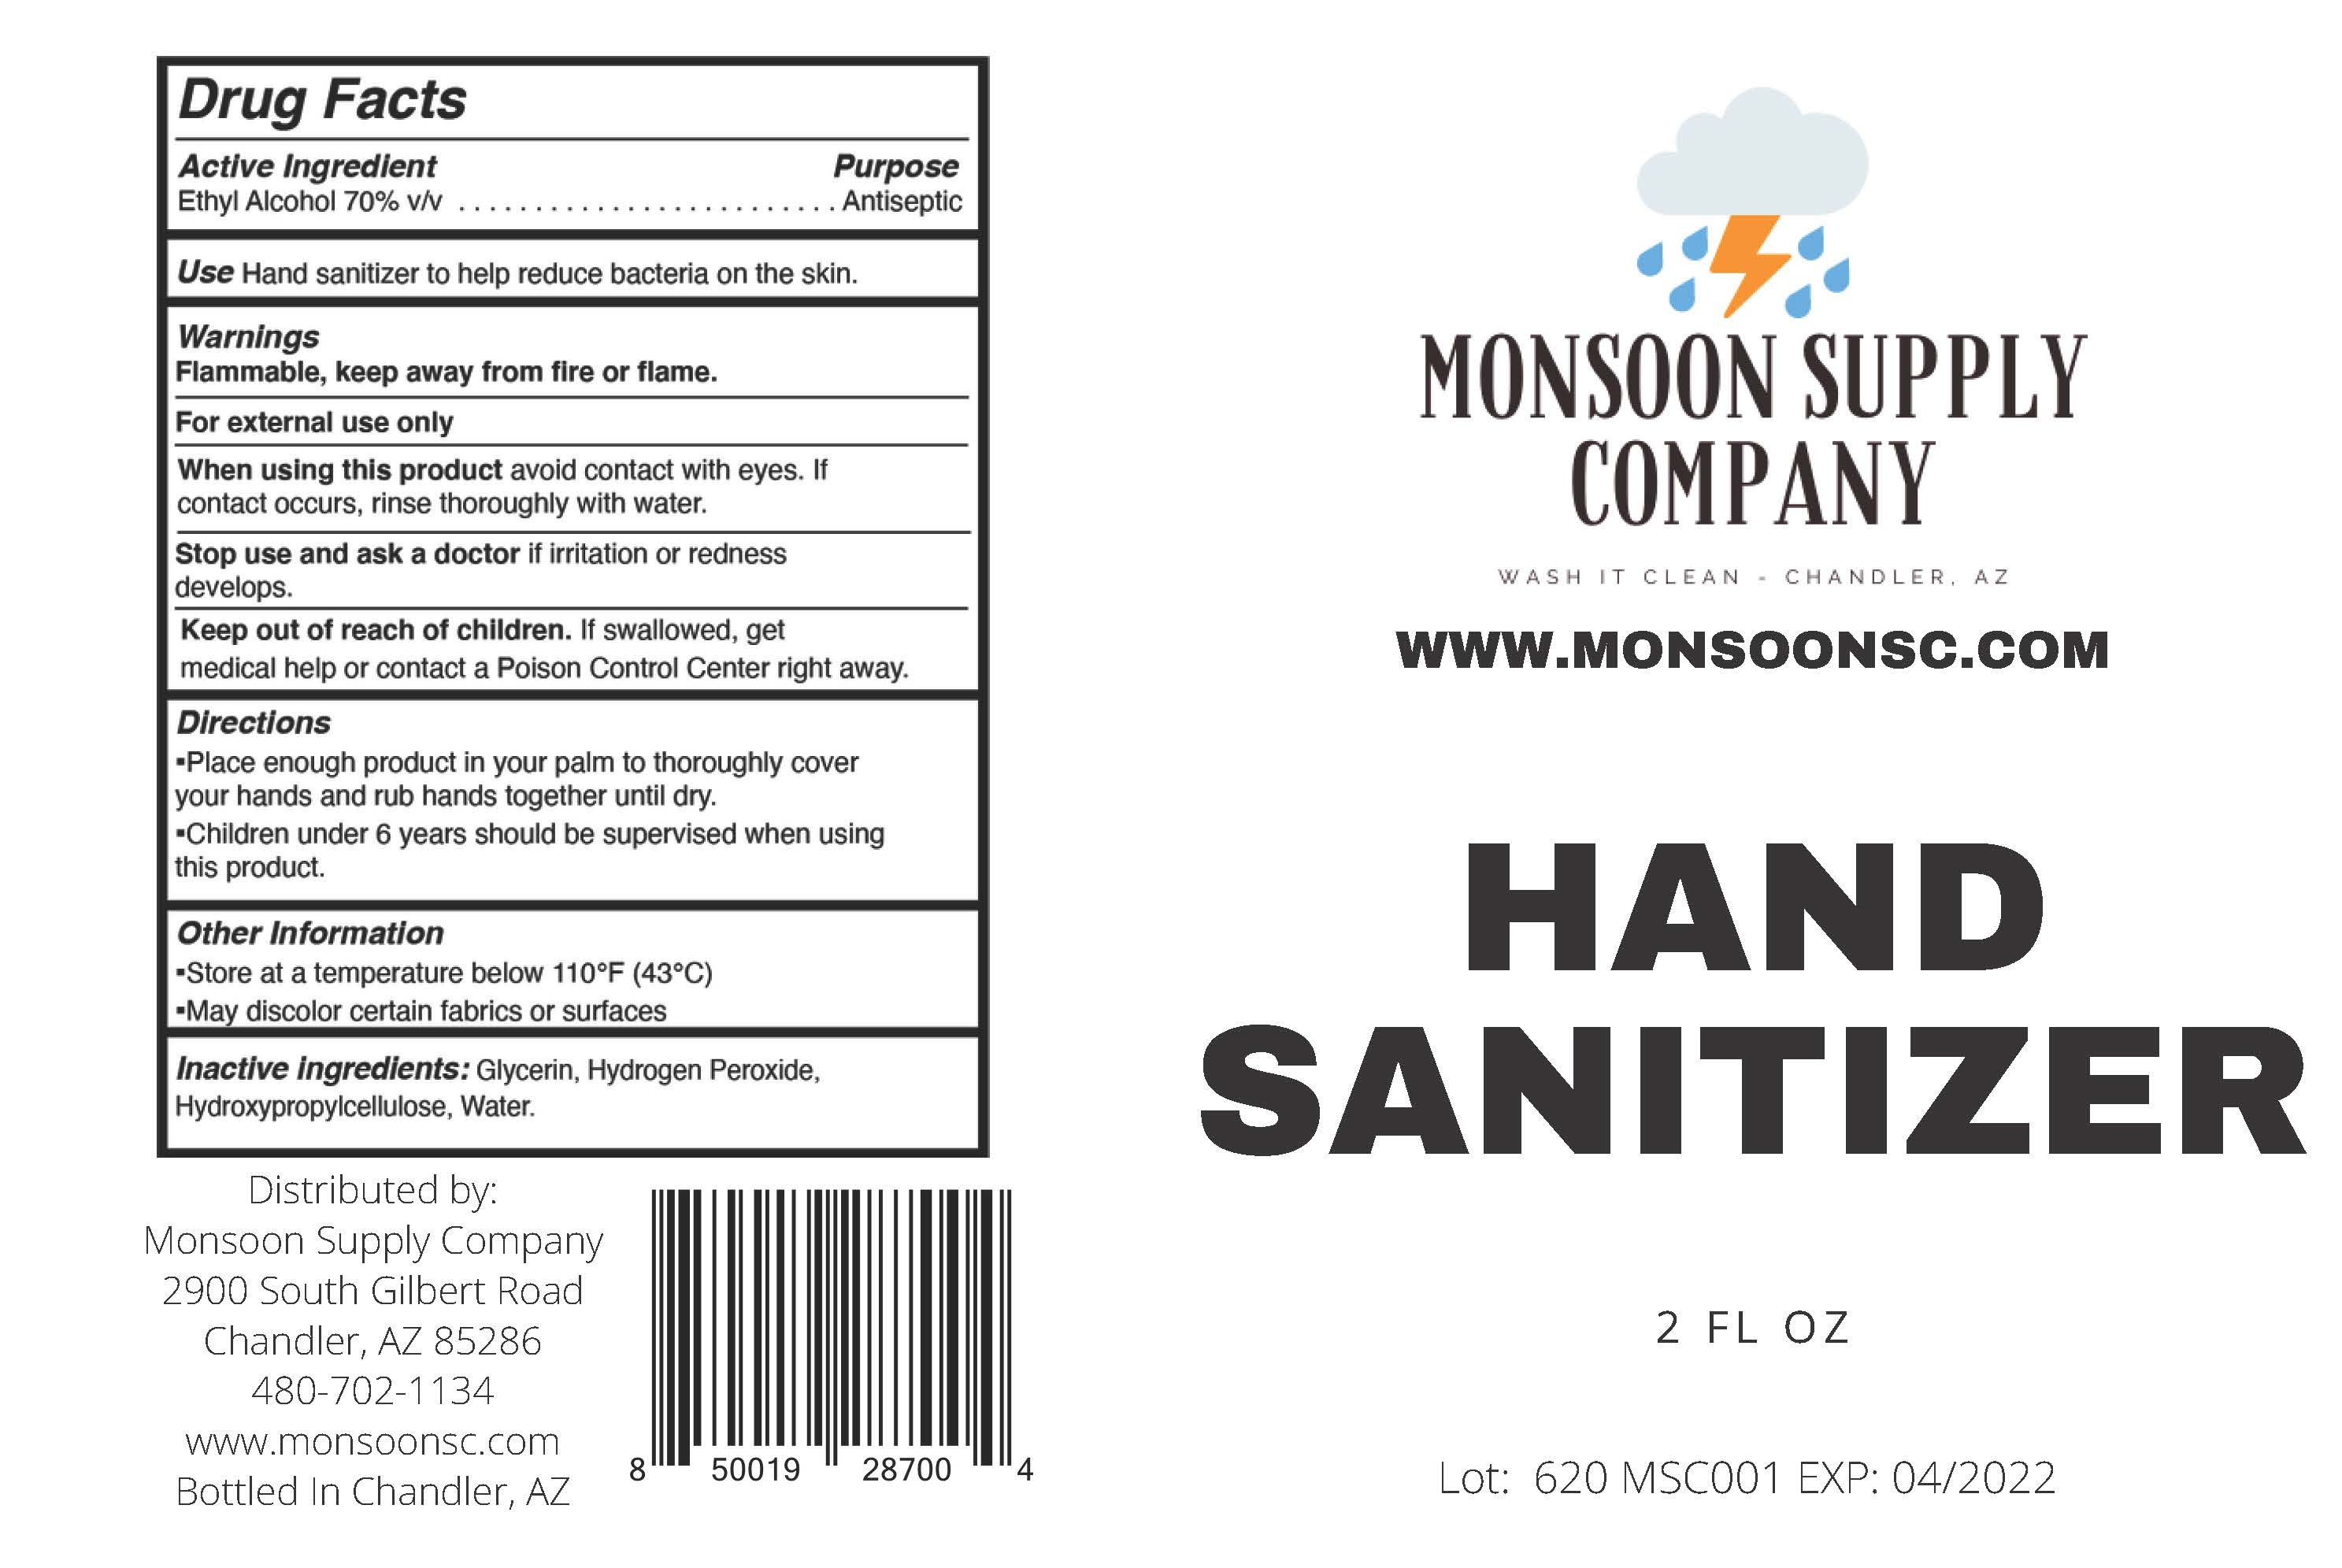 Monsoon Supply Company - 2 fl oz size